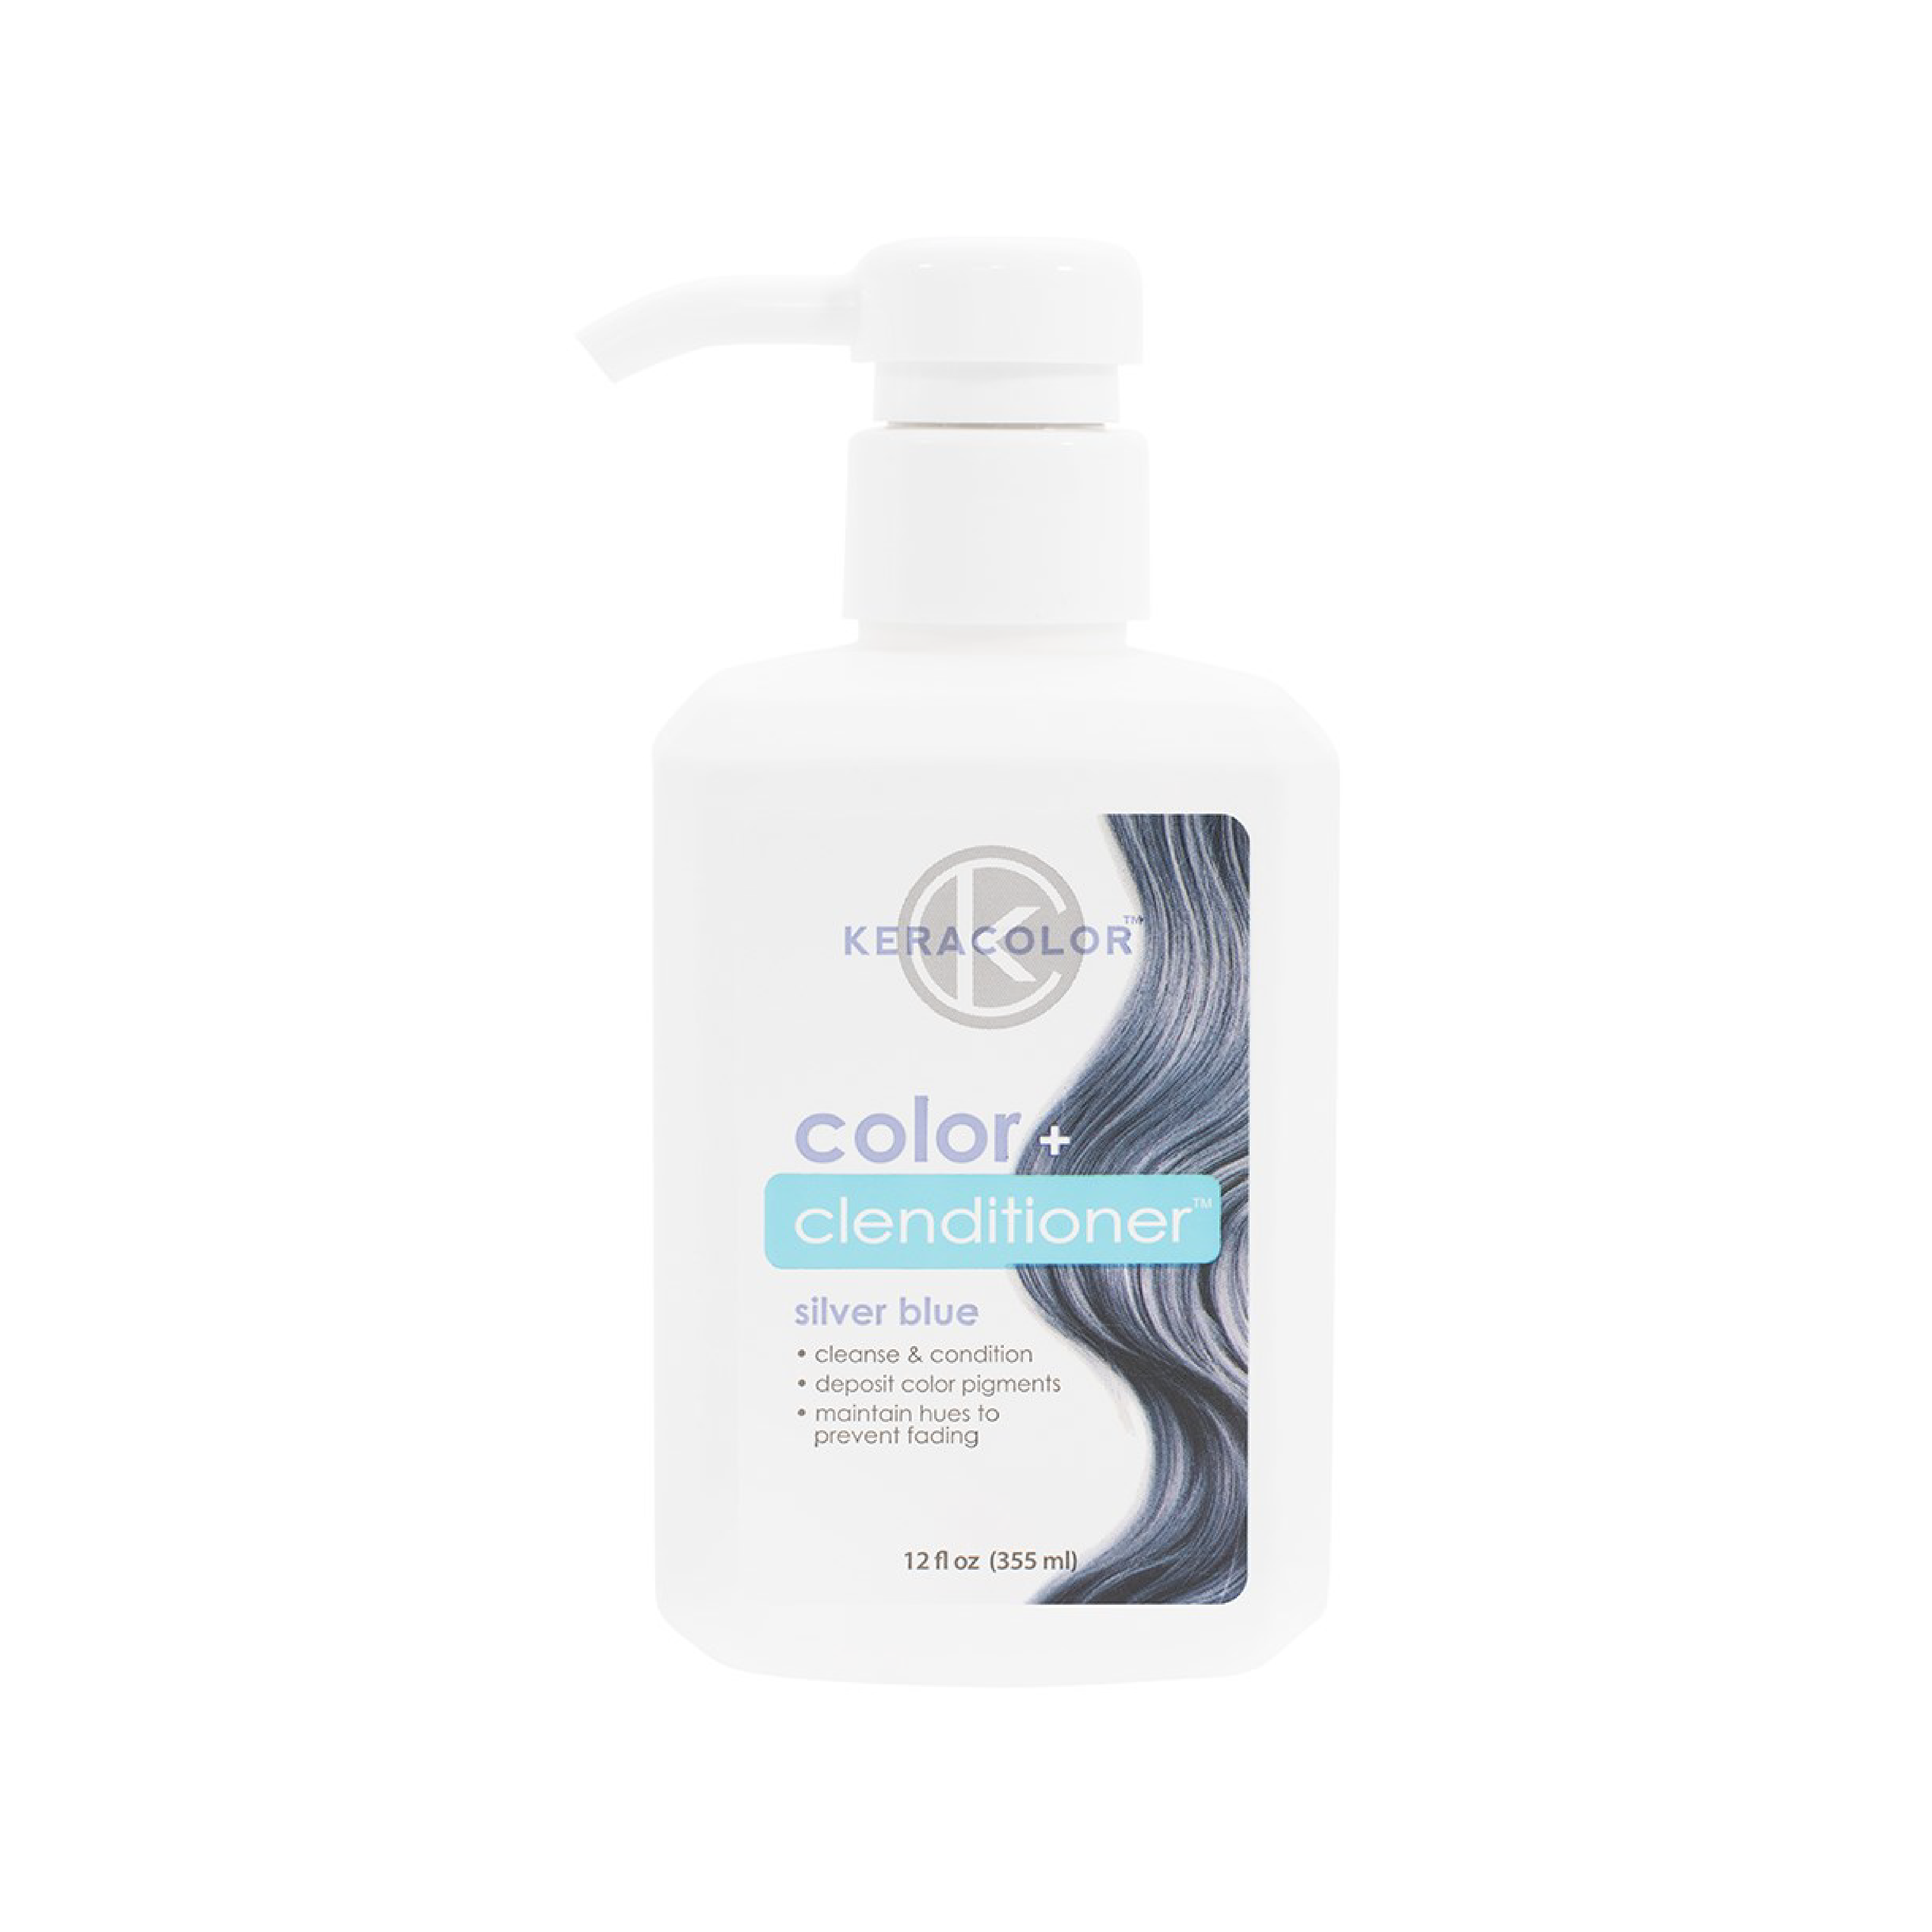 Keracolor Color Clenditioner Silver Blue Colouring Shampoo - 355ml